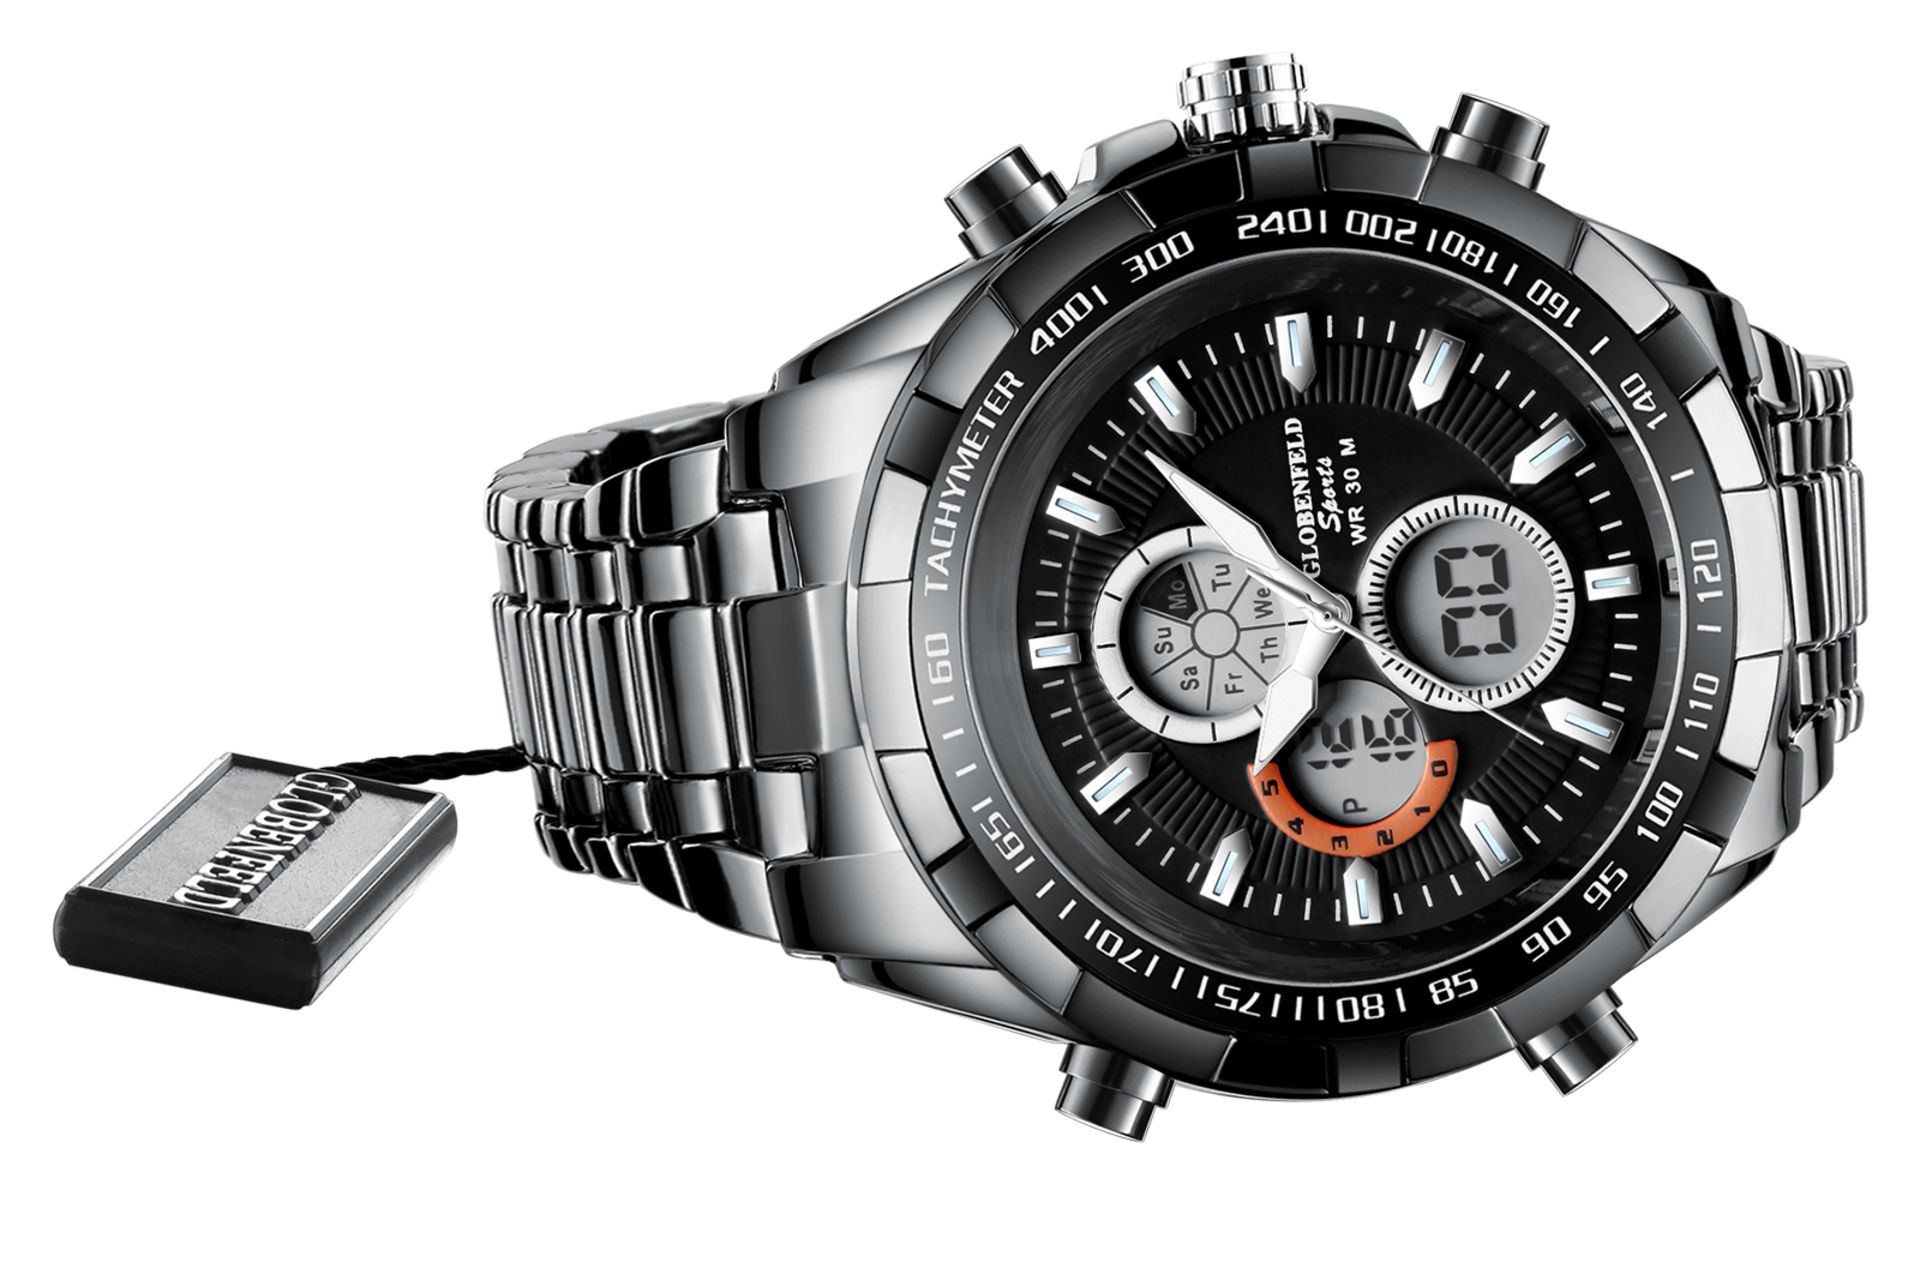 V Brand New Globenfeld Sport Shark Grey Watch - Sony Battery - Stainless Steel Crown - High - Image 3 of 4